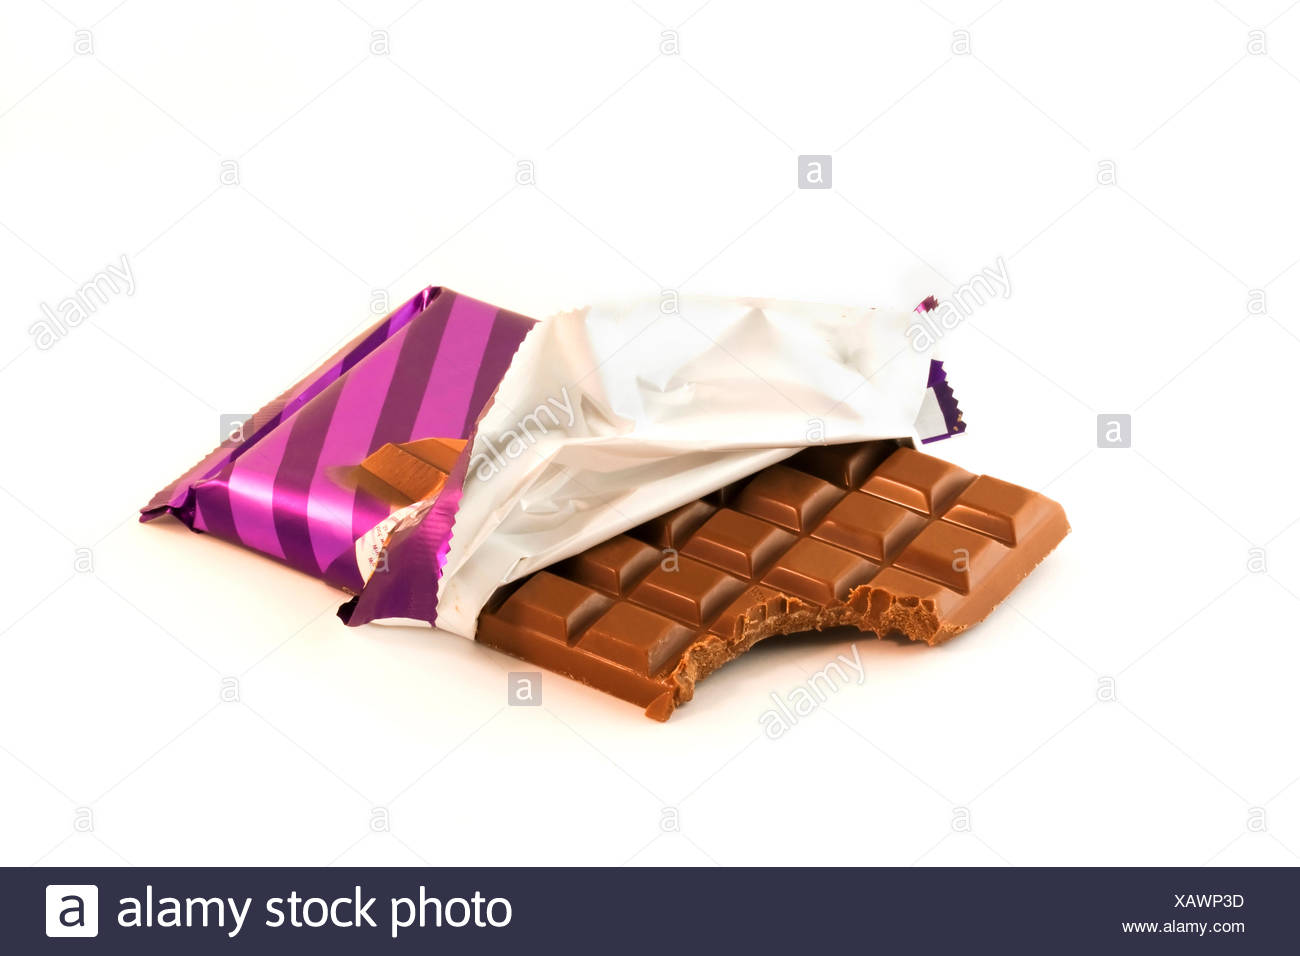 Chocolate Bar Wrapper Stock Photos & Chocolate Bar Wrapper Stock ...